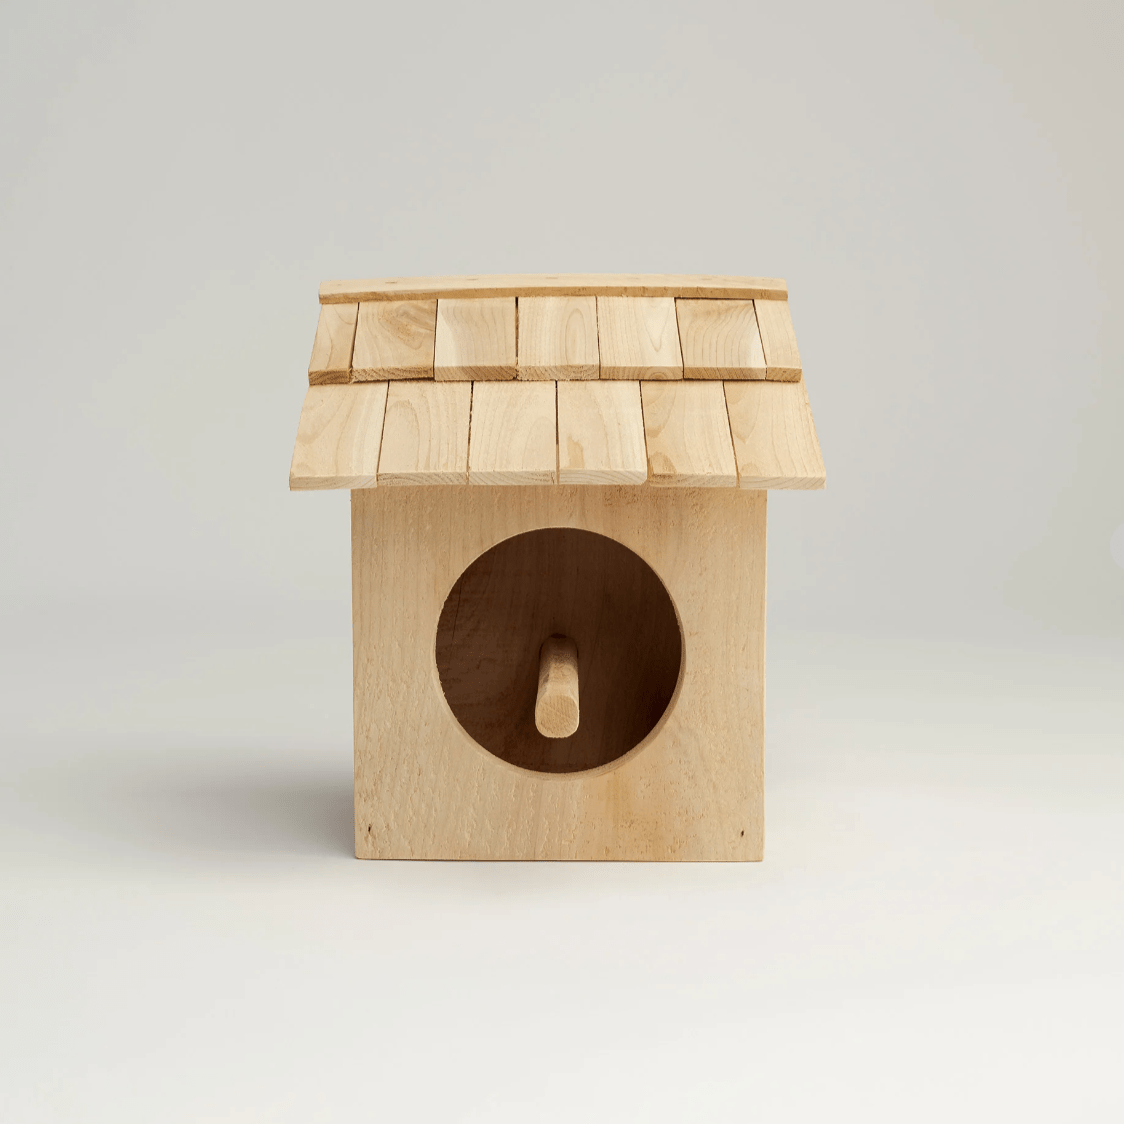 Birdhouse No. 1